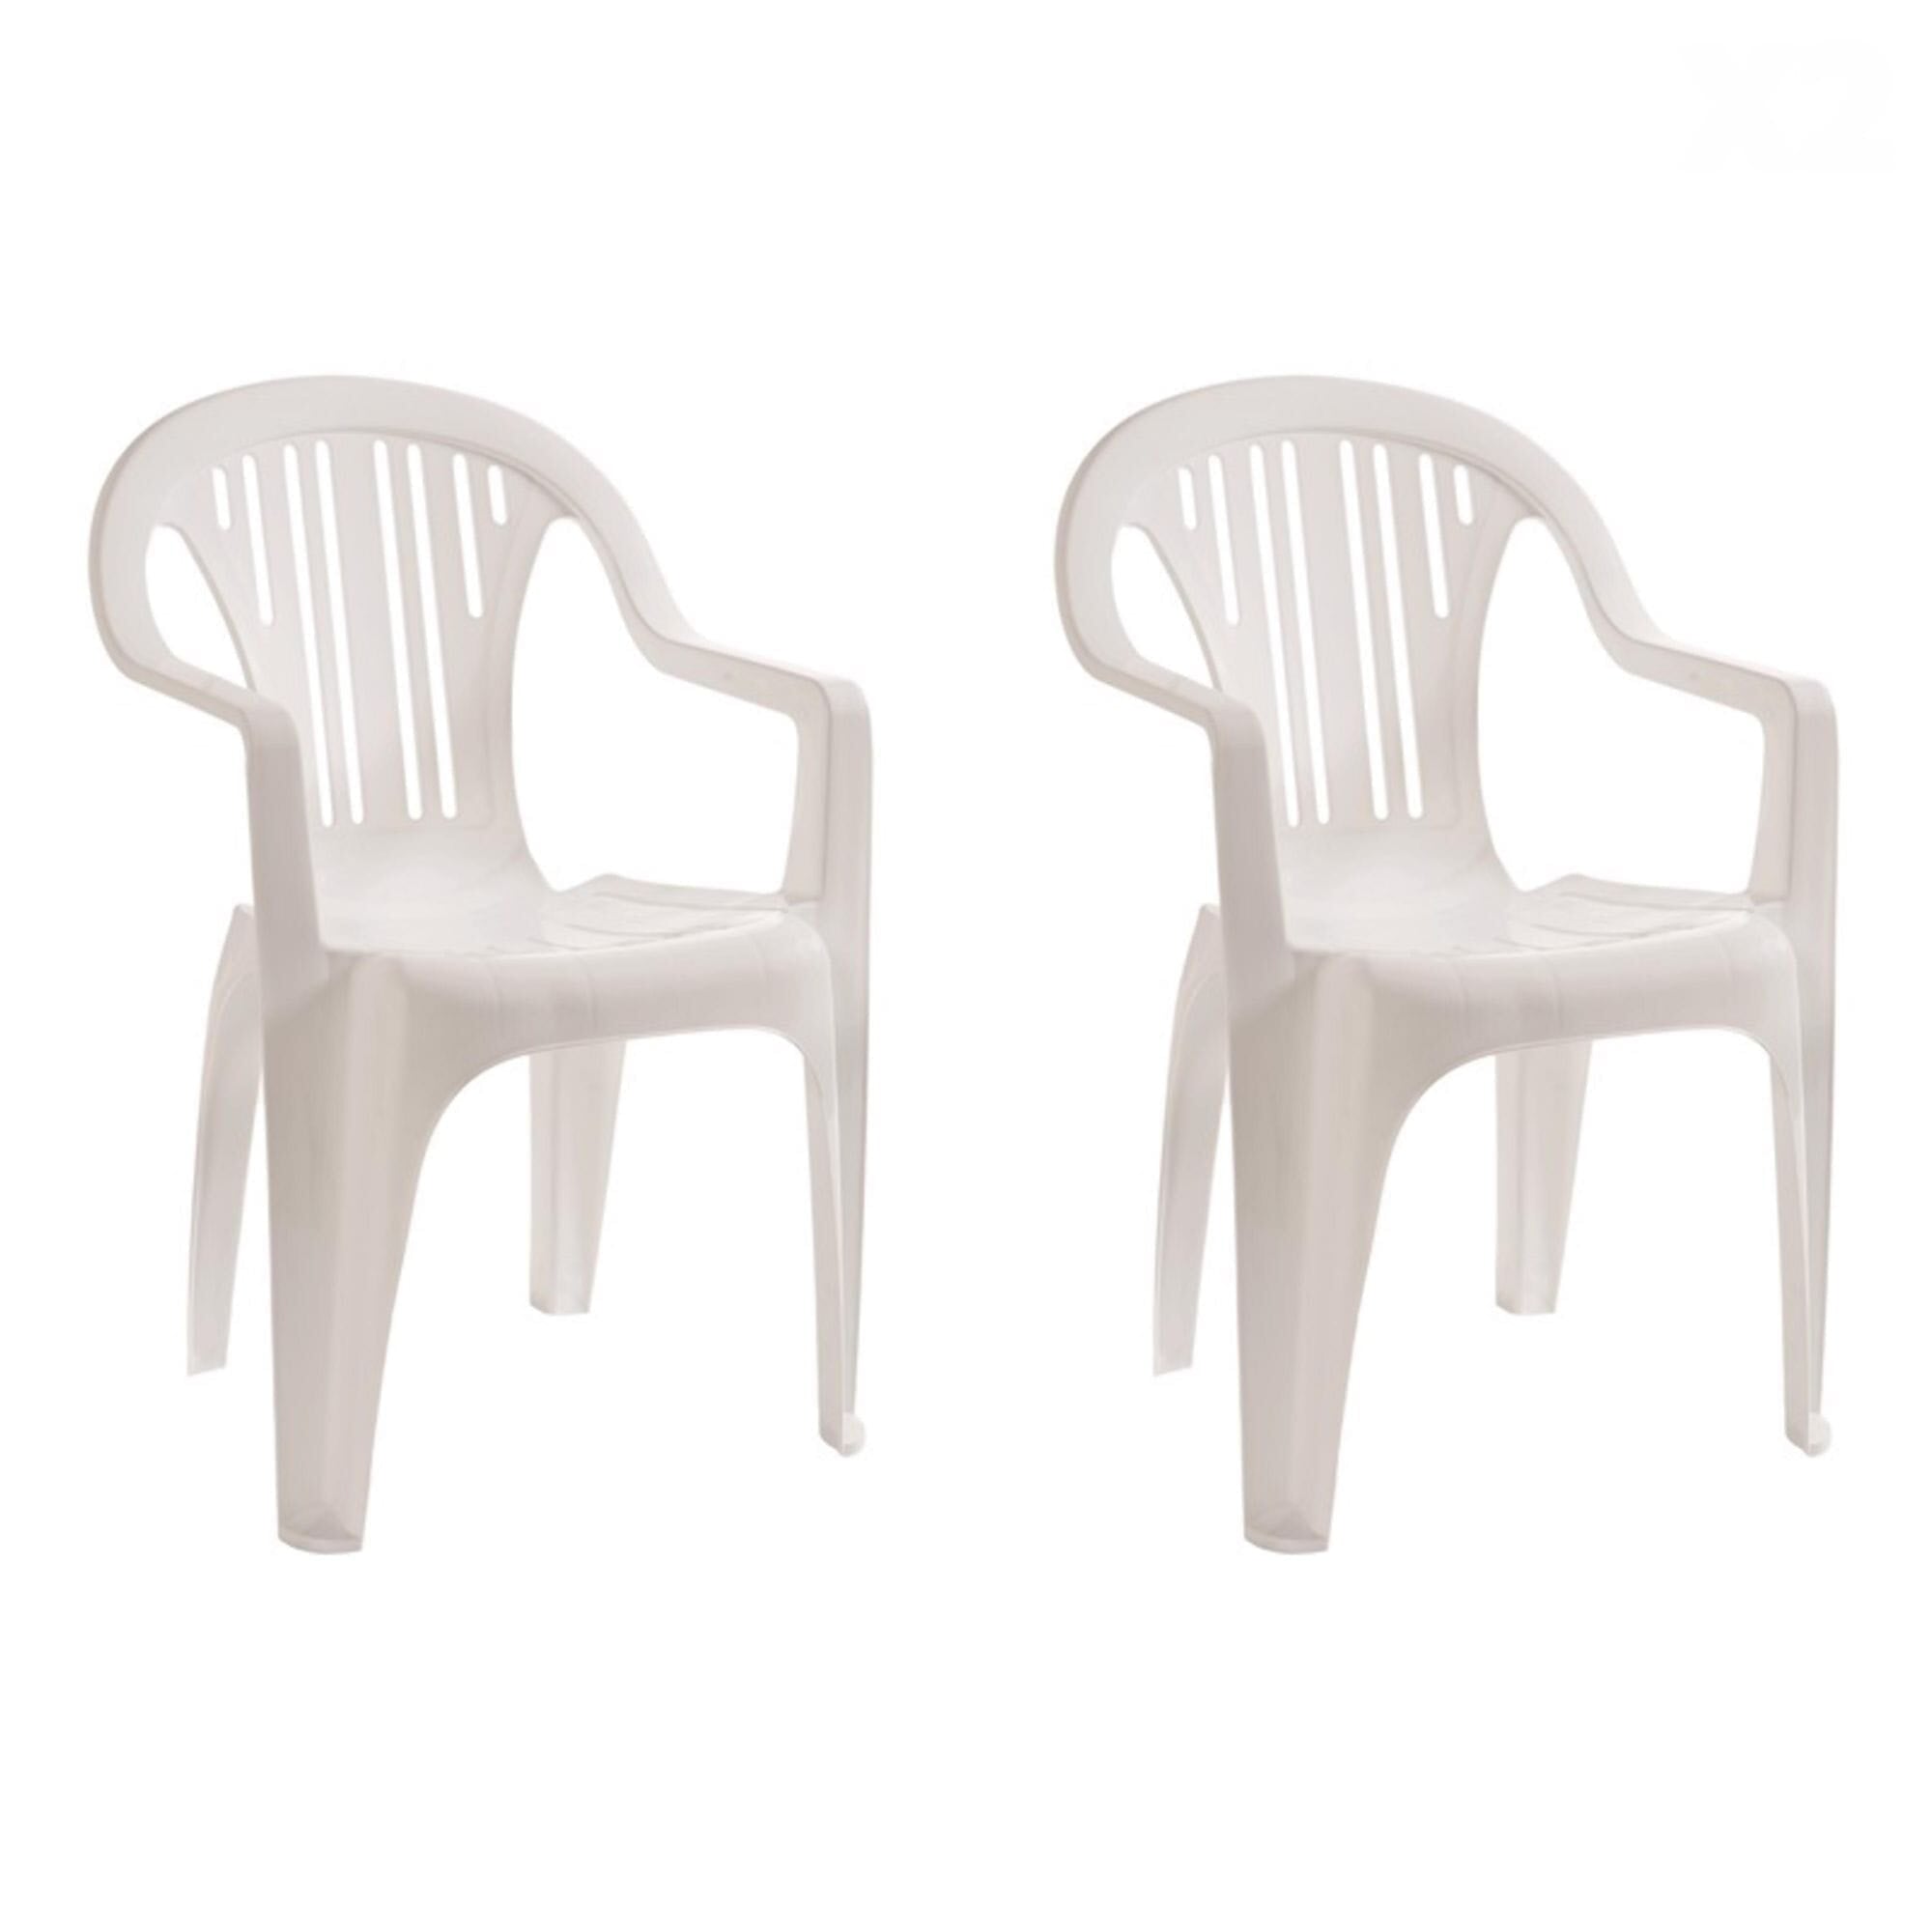 Garbar Port armchair set 2 white 2 white